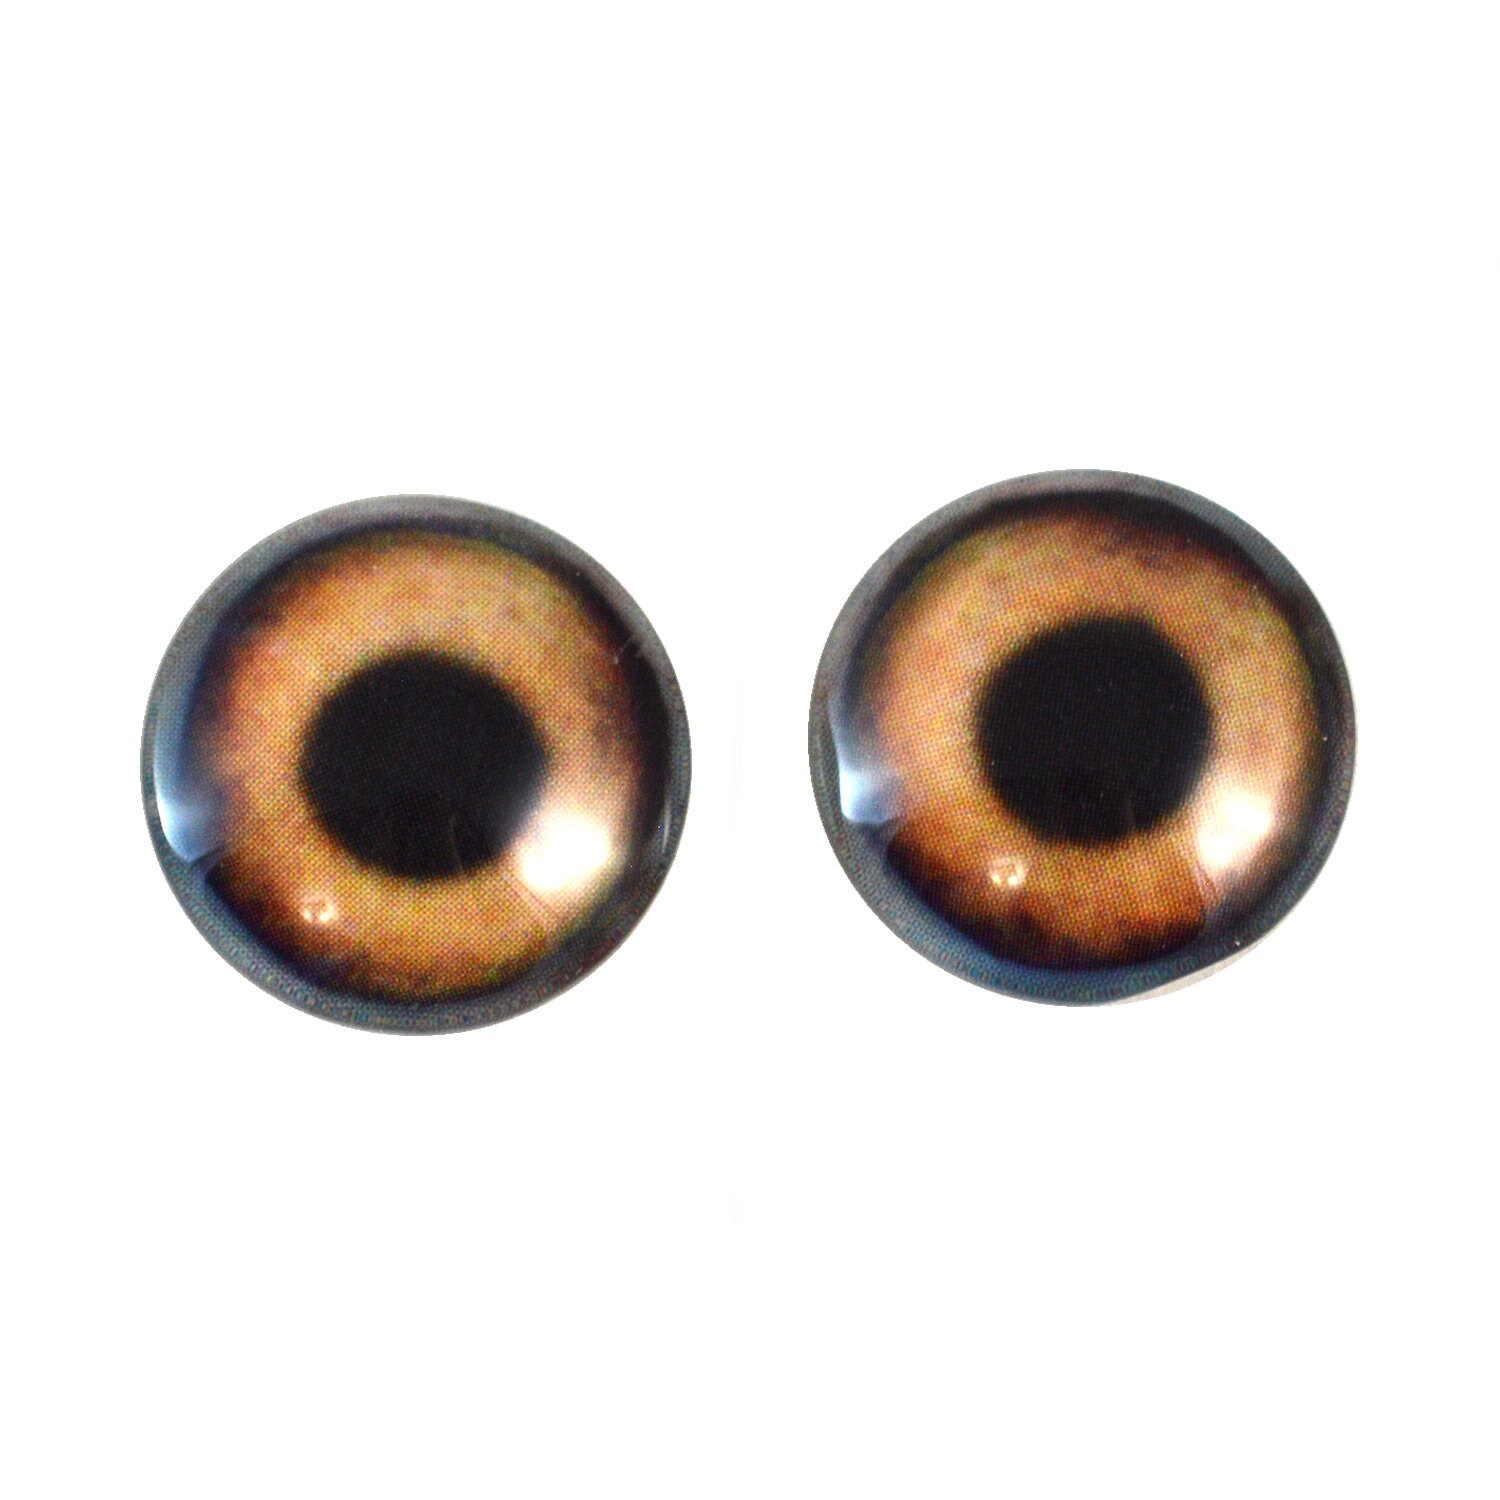 18mm Dark Brown Iris Black Pupils Round Safety Eyes and Washers: 2 Pairs –  Doll / Amigurumi / Animal / Stuffed Creations / Crochet / Knit